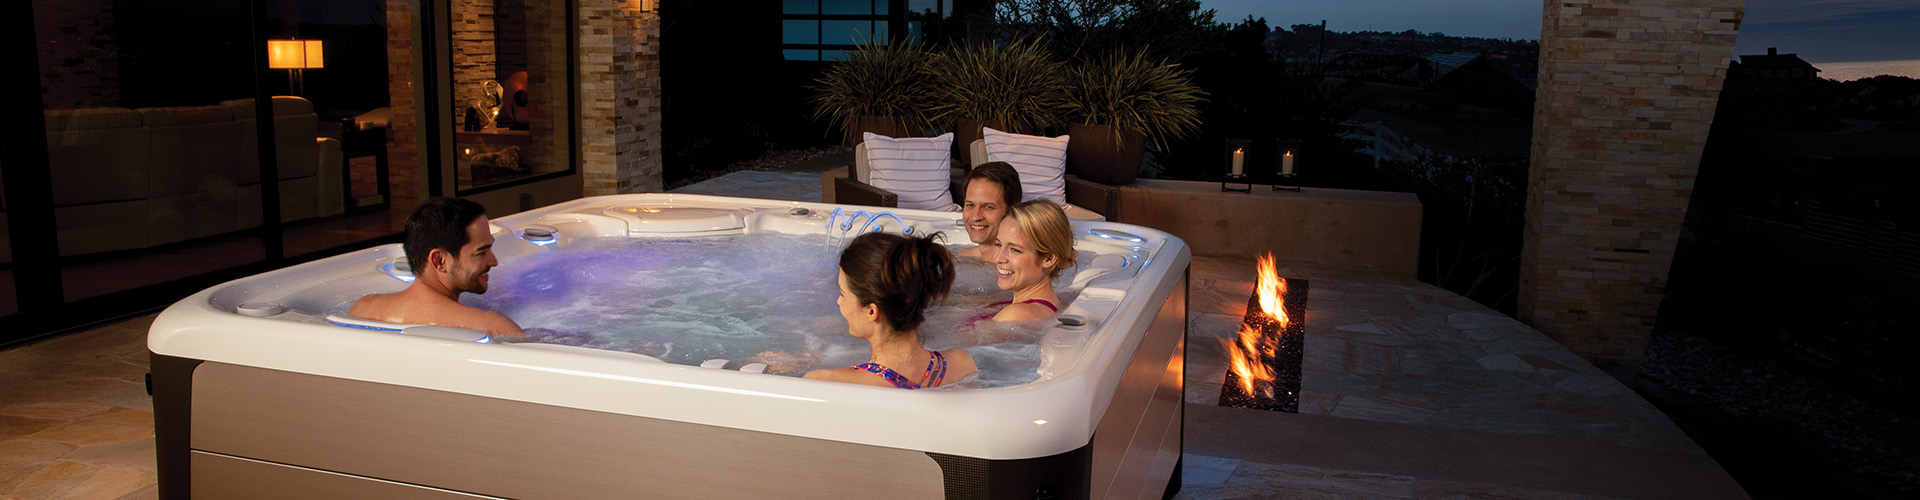 Hot Tub Enclosures for All Seasons